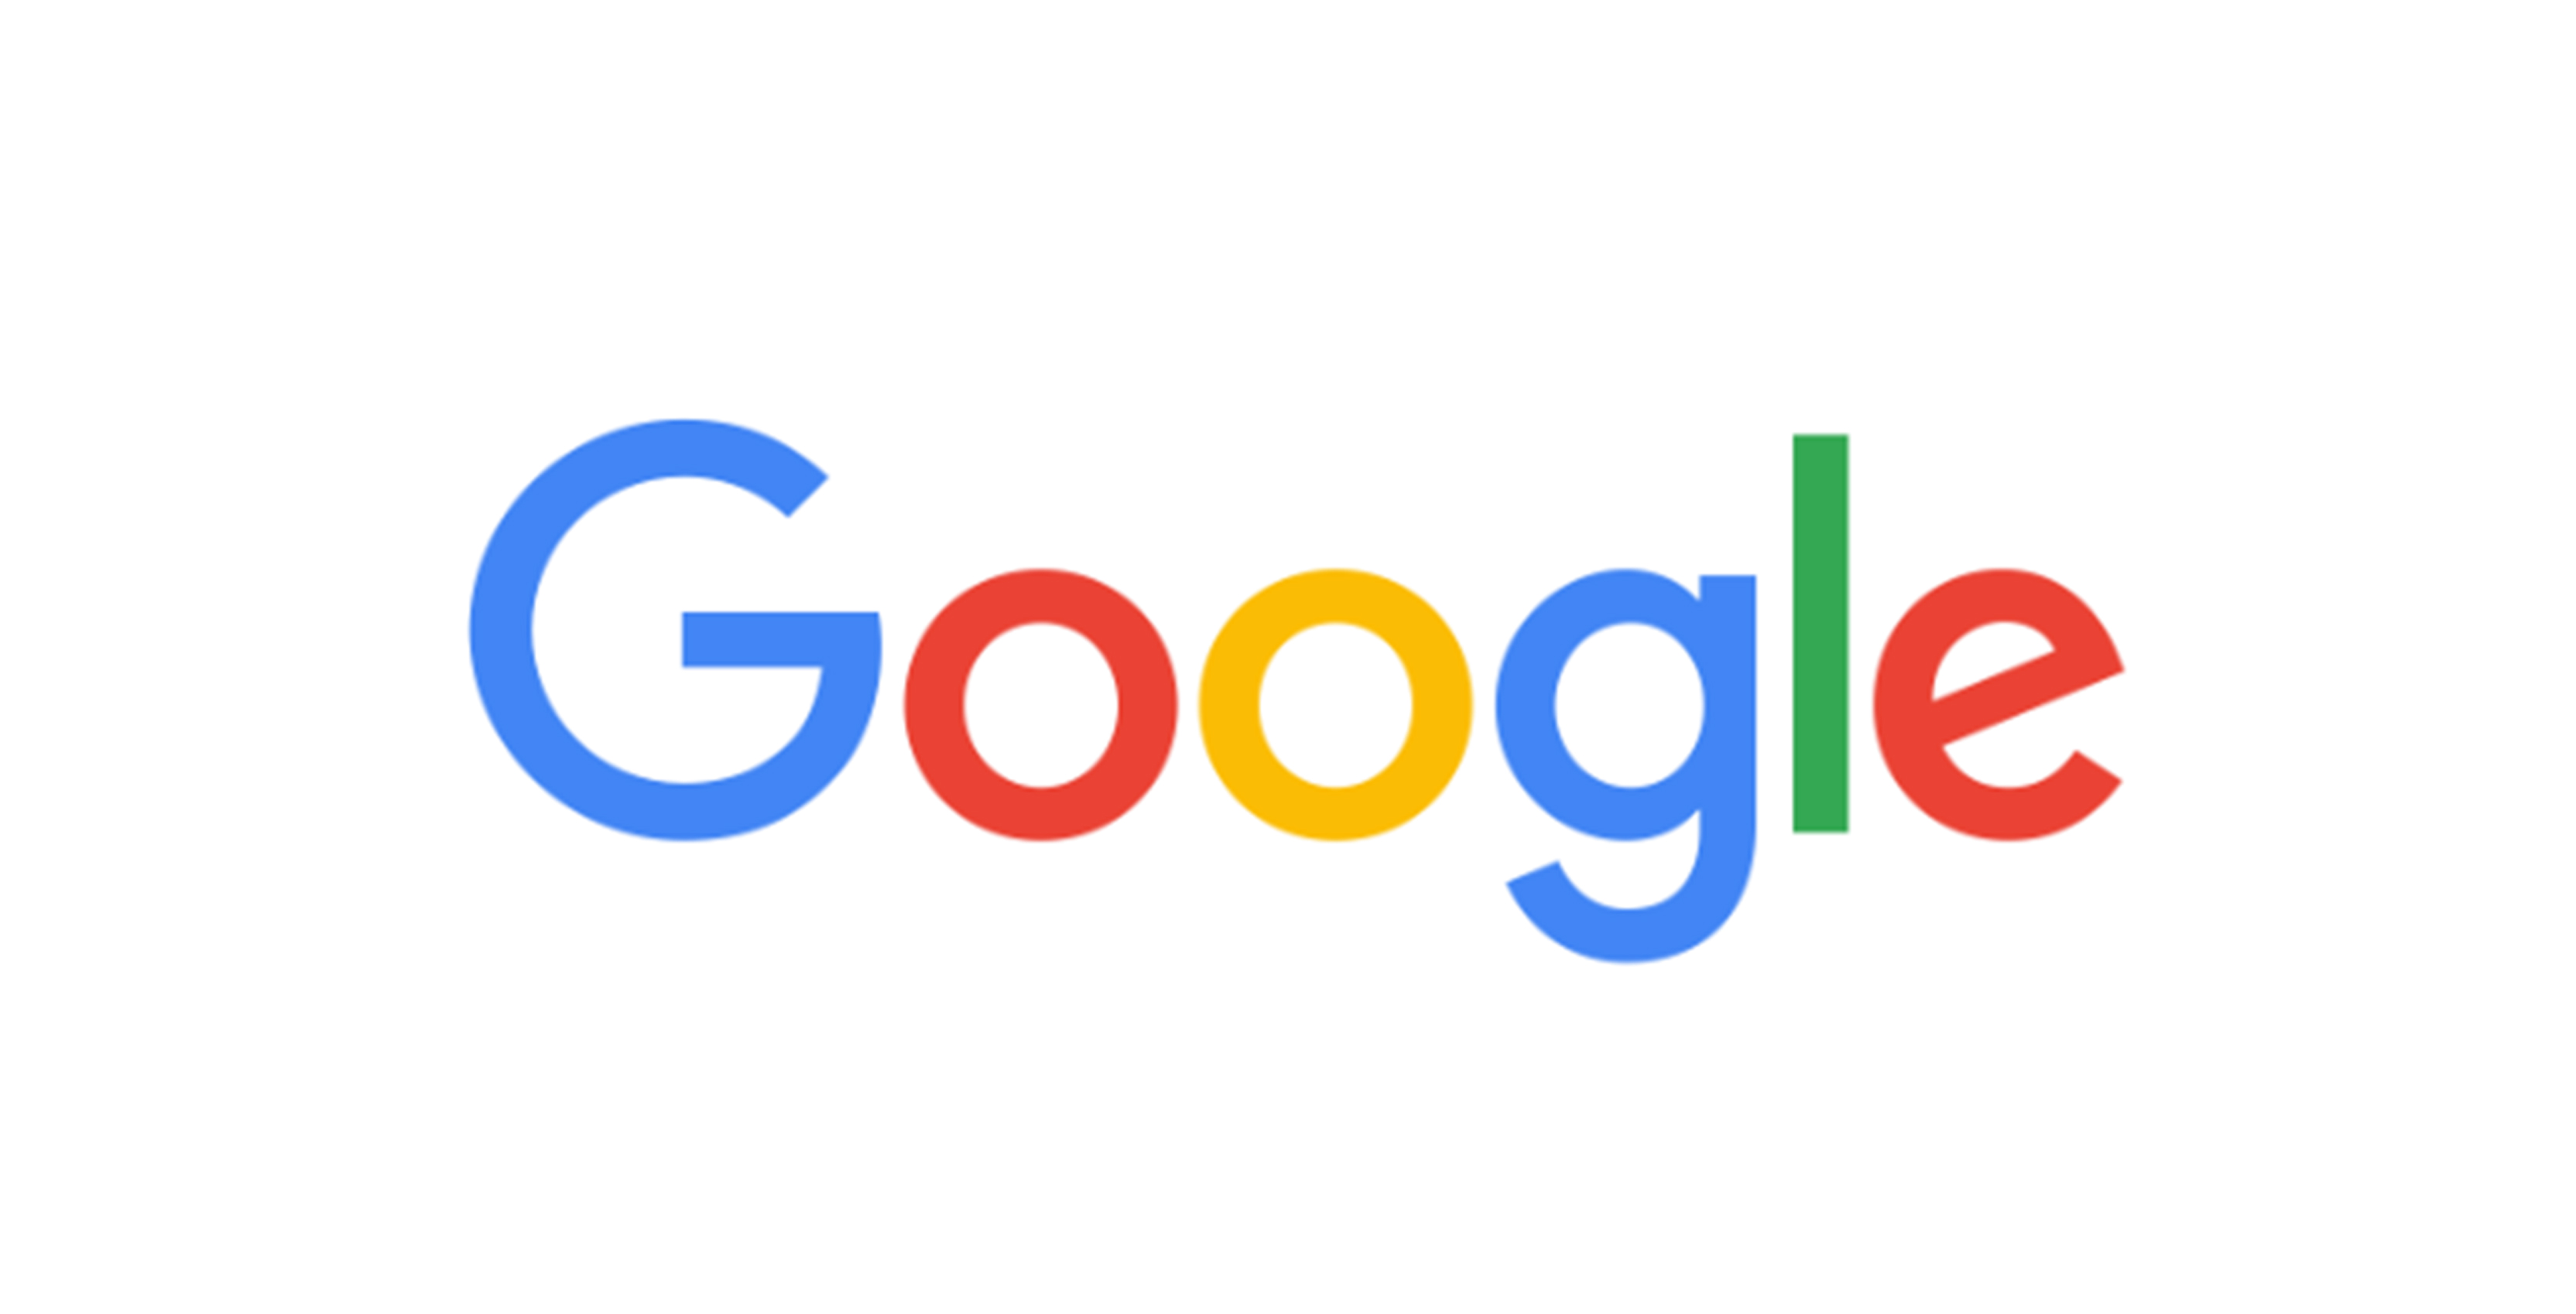 Google logo in Google Sans